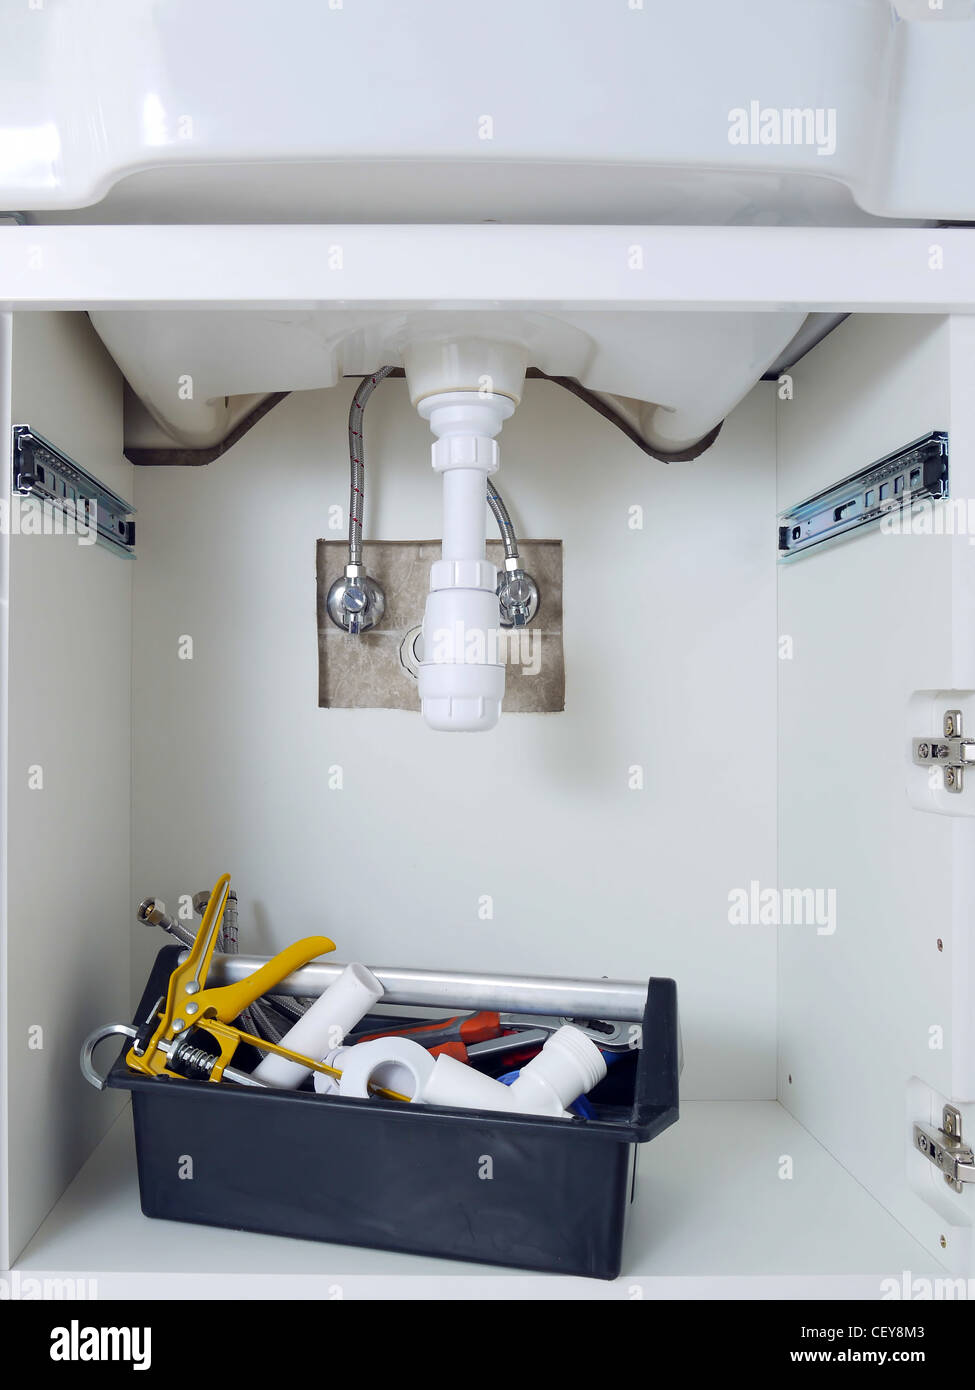 Bathroom cabinet with washbasin plumbing fixtures and plumber's toolbox Stock Photo